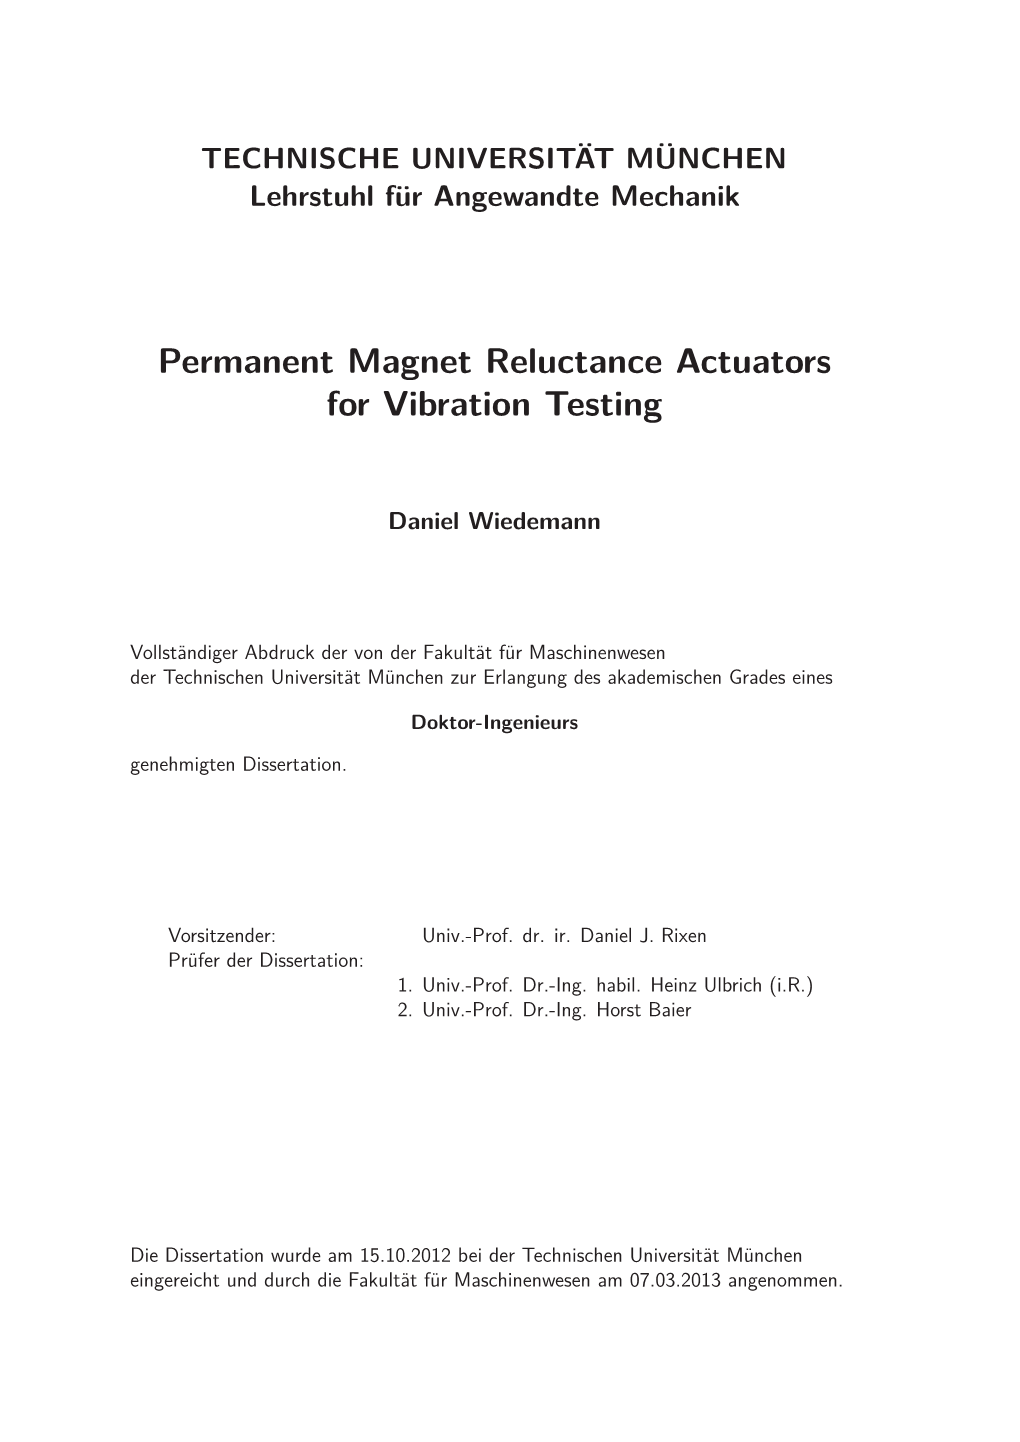 Permanent Magnet Reluctance Actuators for Vibration Testing